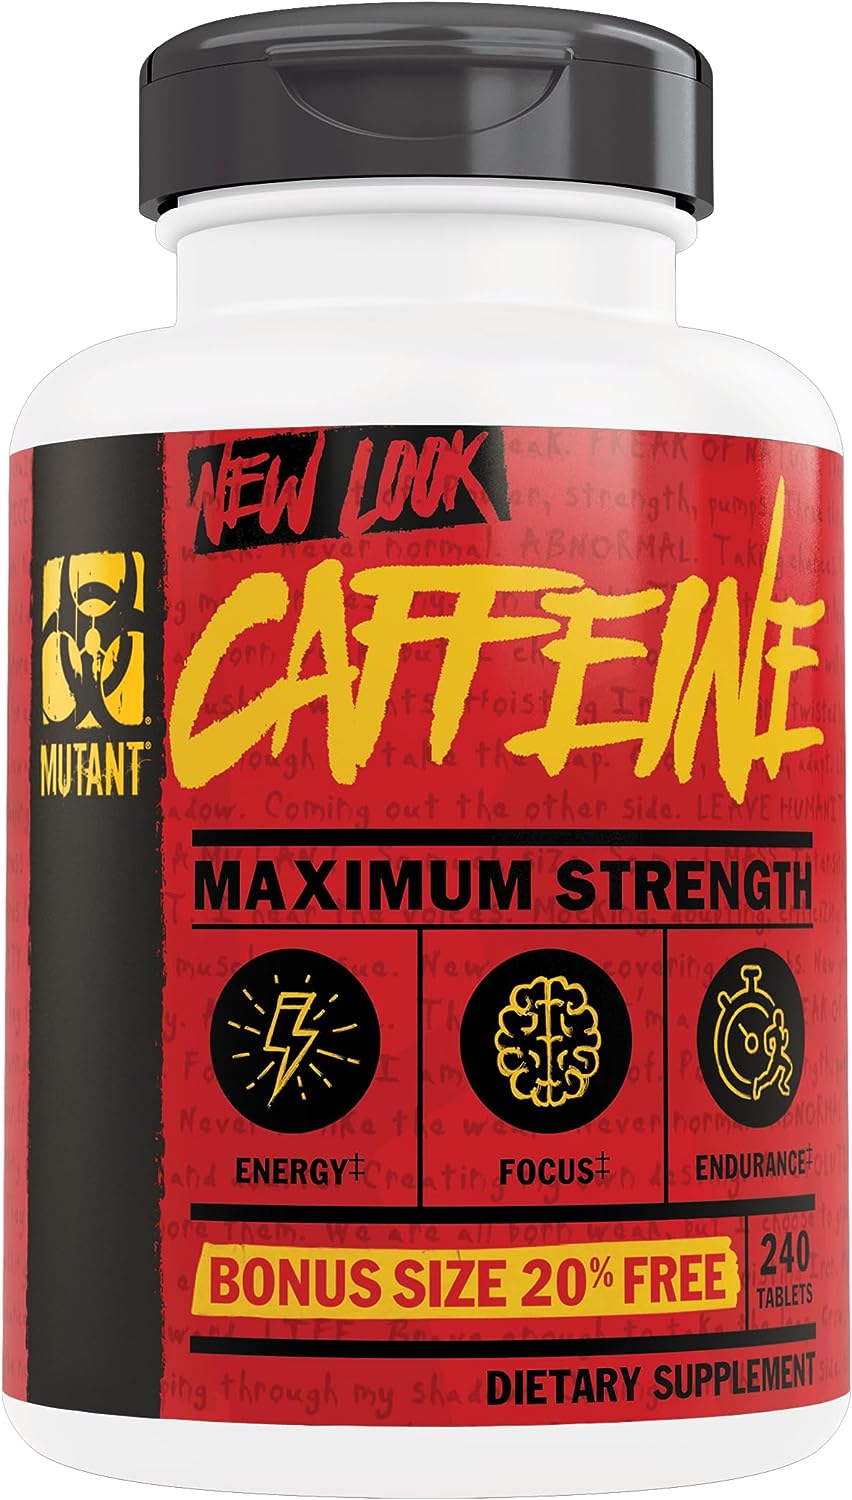 Mutant Caffeine ? Pure and Straightforward Pharmaceutical-Grade Caffei